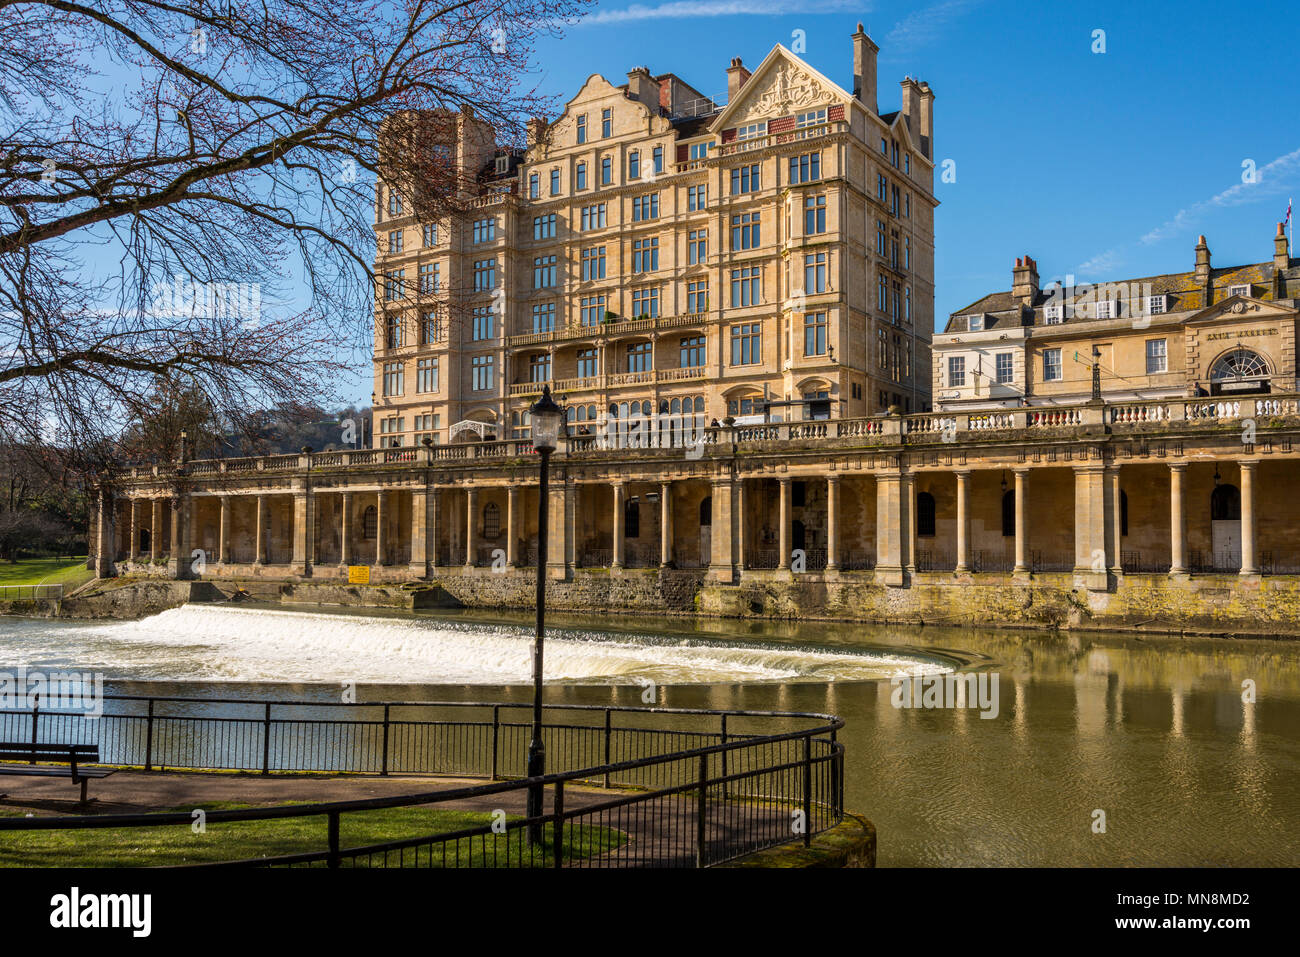 Empire Hotel and River Avon, Bath, Somerset, UK Stock Photo